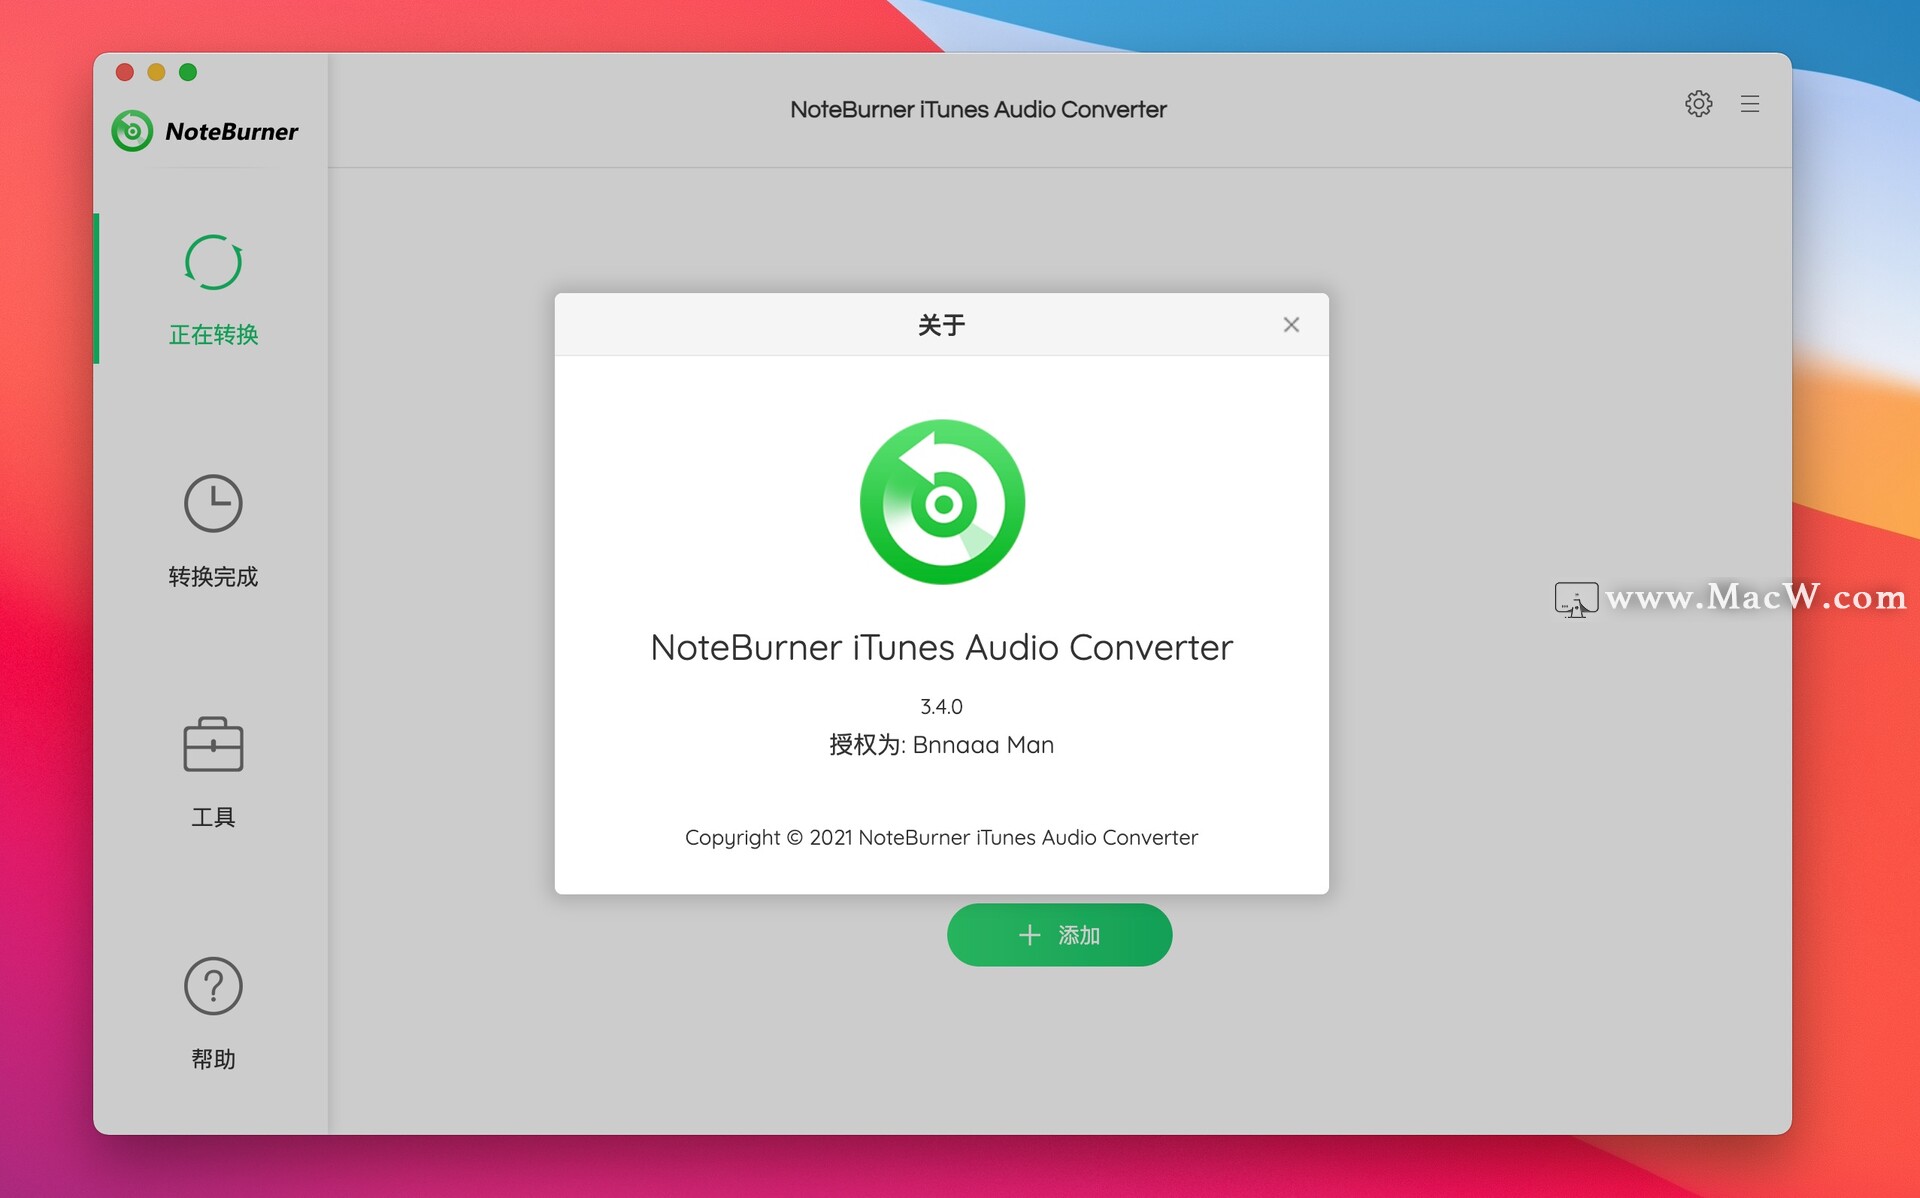 Mac 苹果DRM音频转换器 NoteBurner iTunes DRM Audio Converter 3.4.0 - 图1